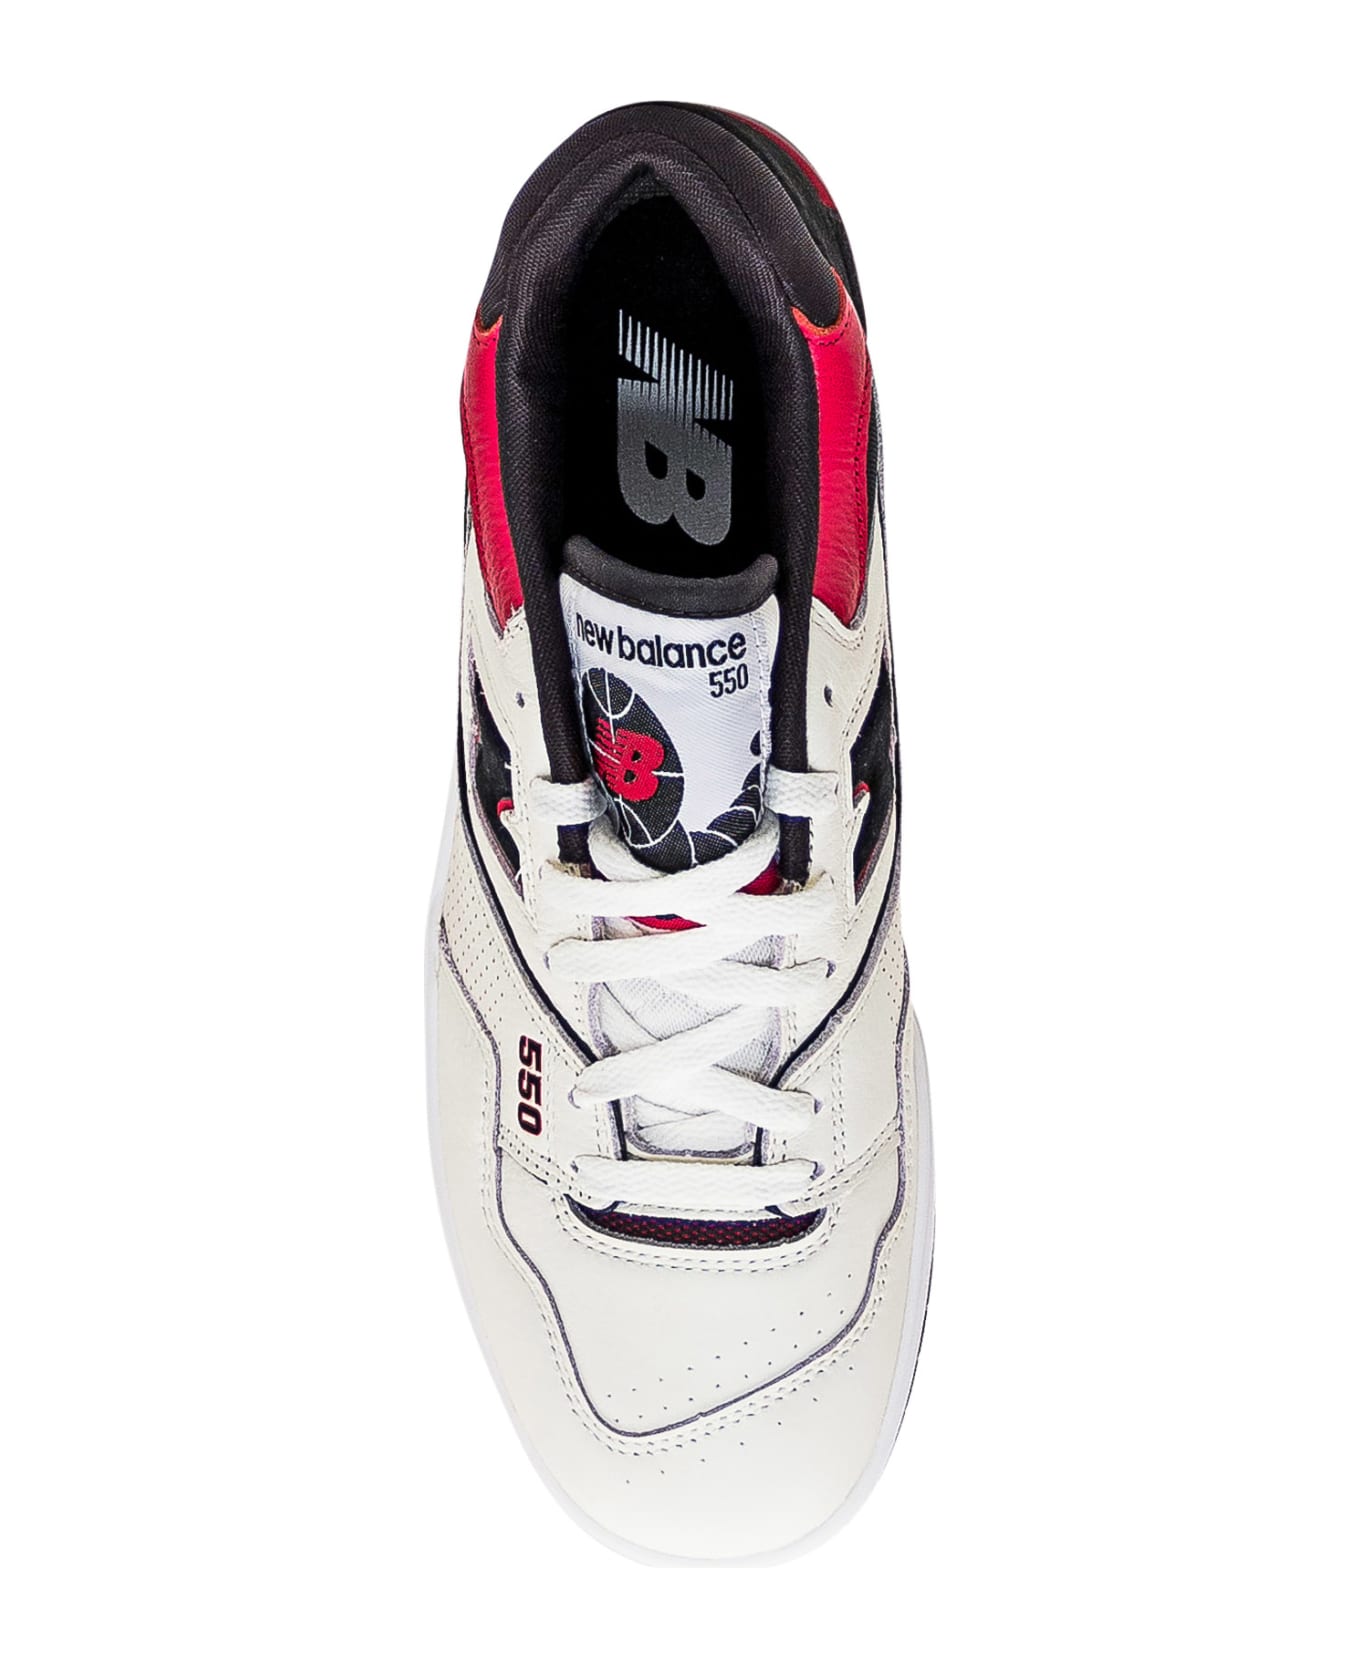 New Balance 550 Sneaker - WHITE